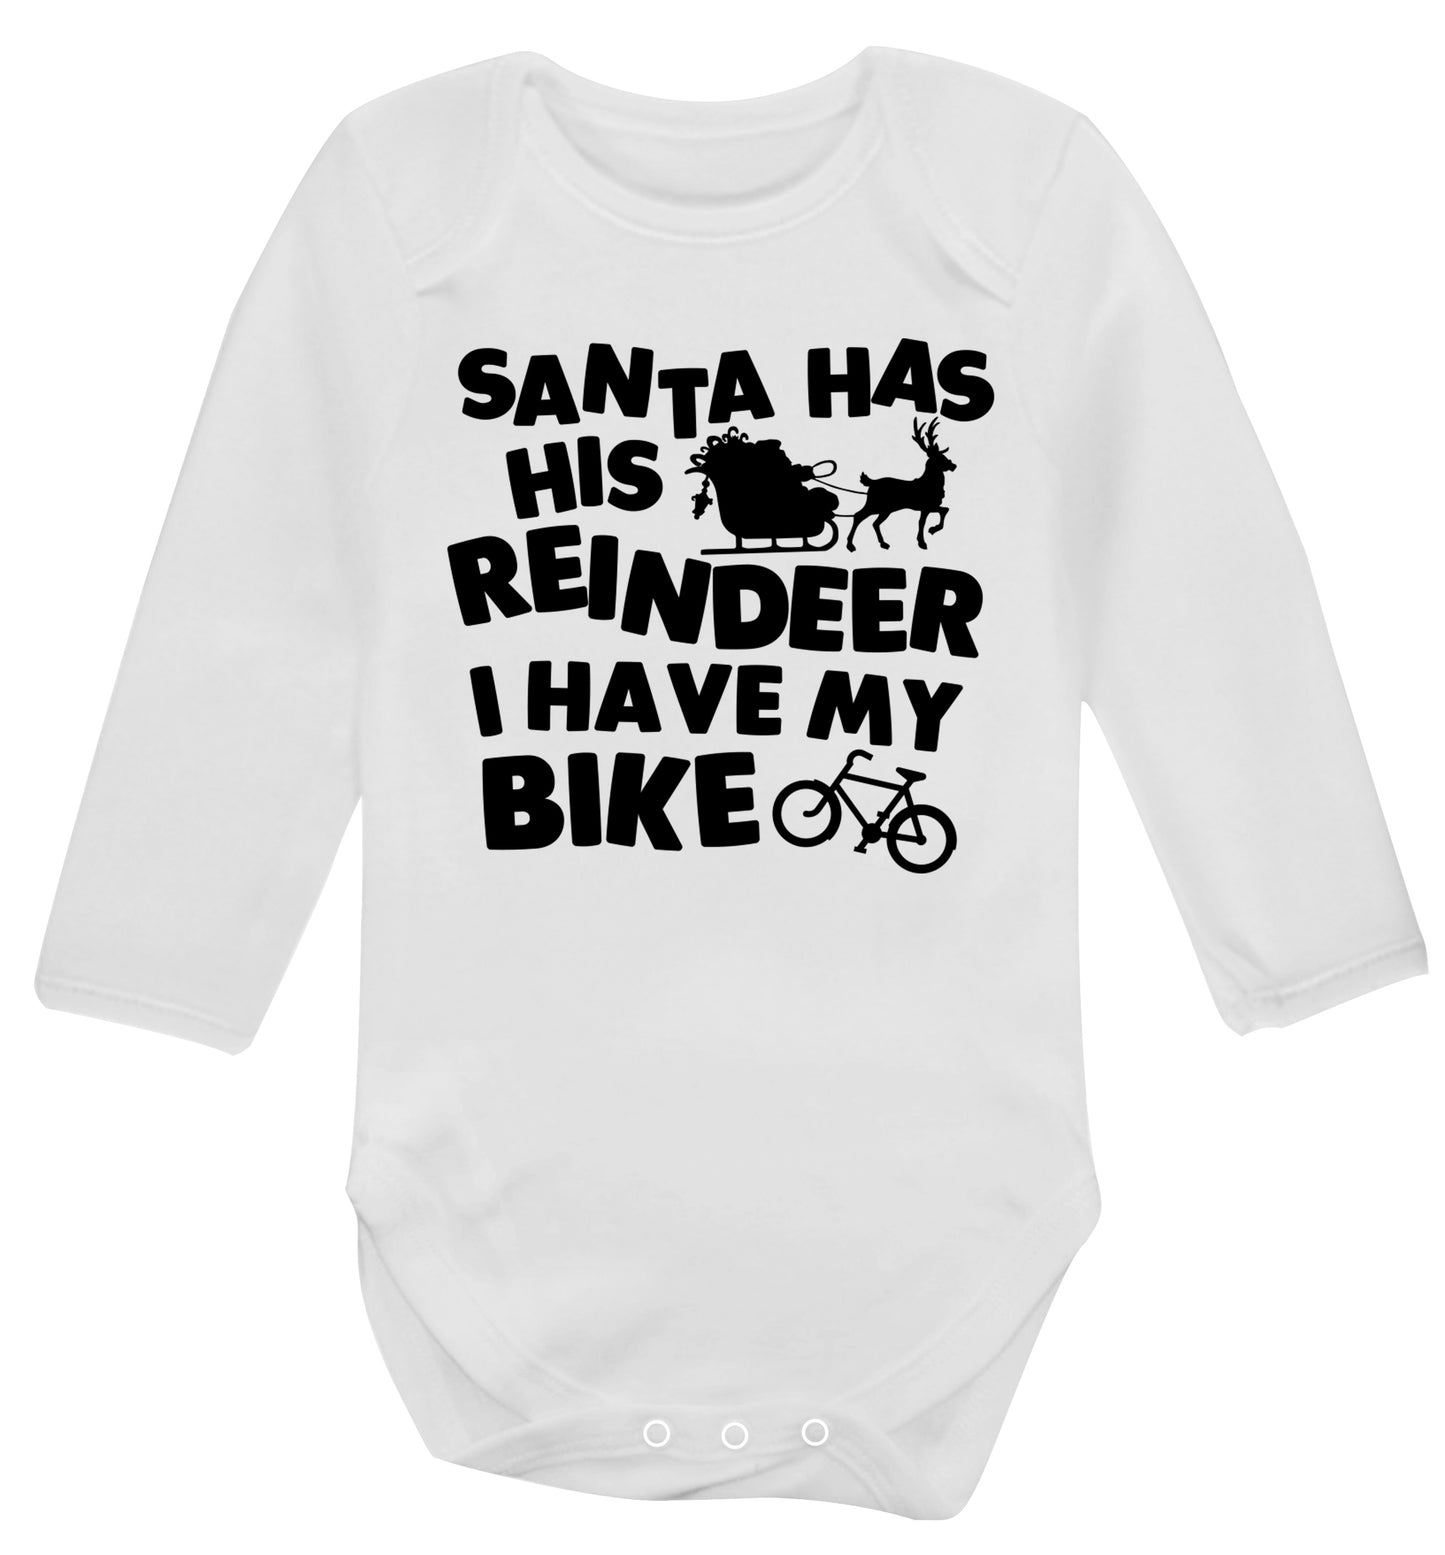 Santa has his reindeer I have my bike Baby Vest long sleeved white 6-12 months